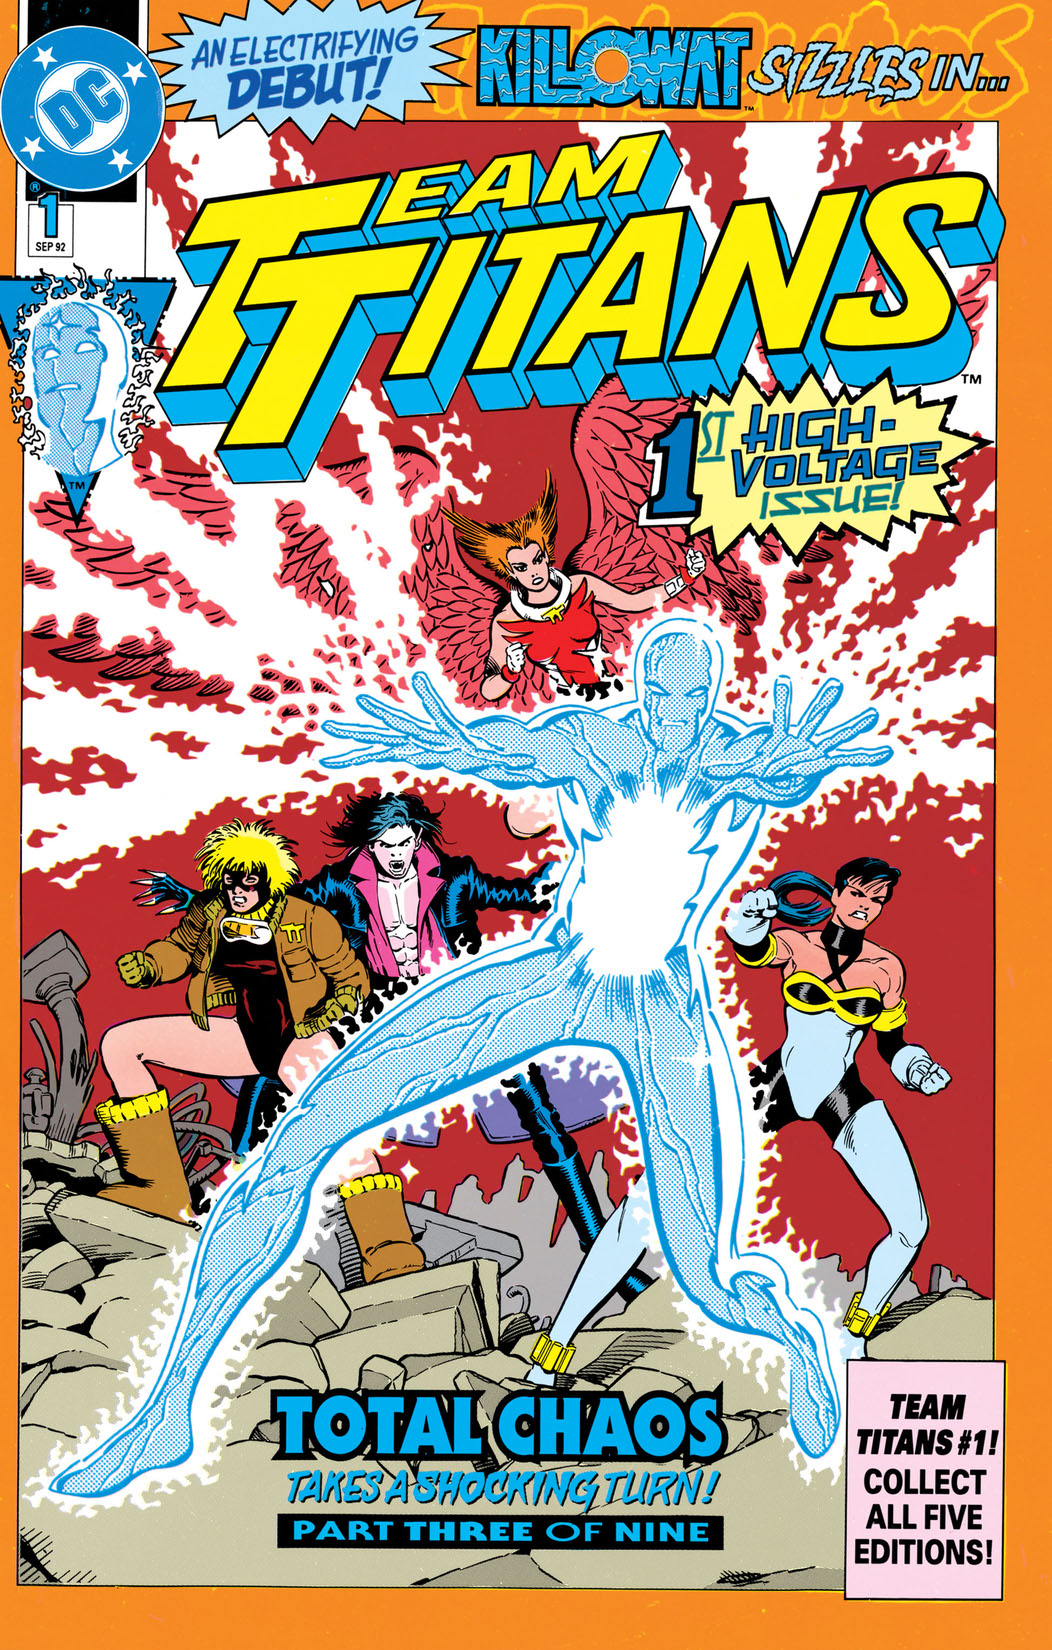 Team Titans #1 preview images